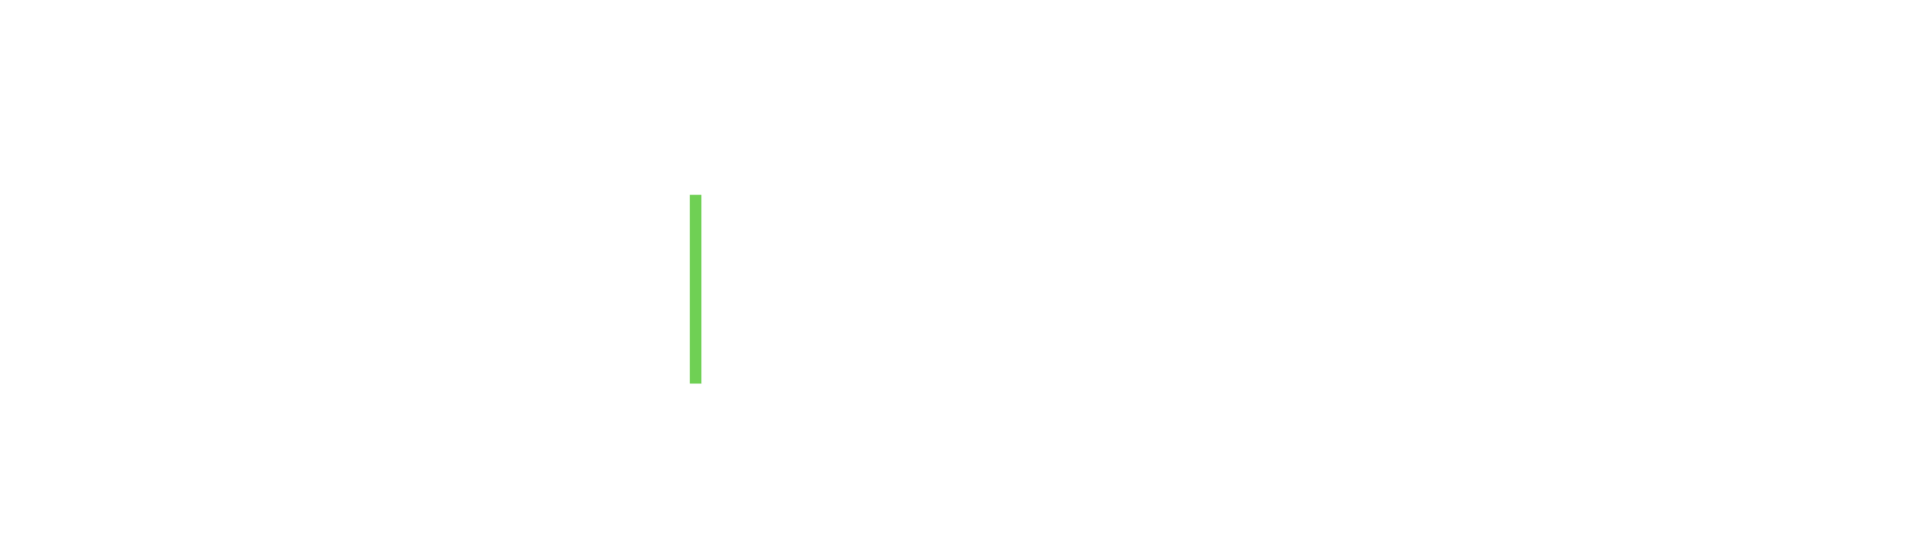 Fresh Has No Boundaries